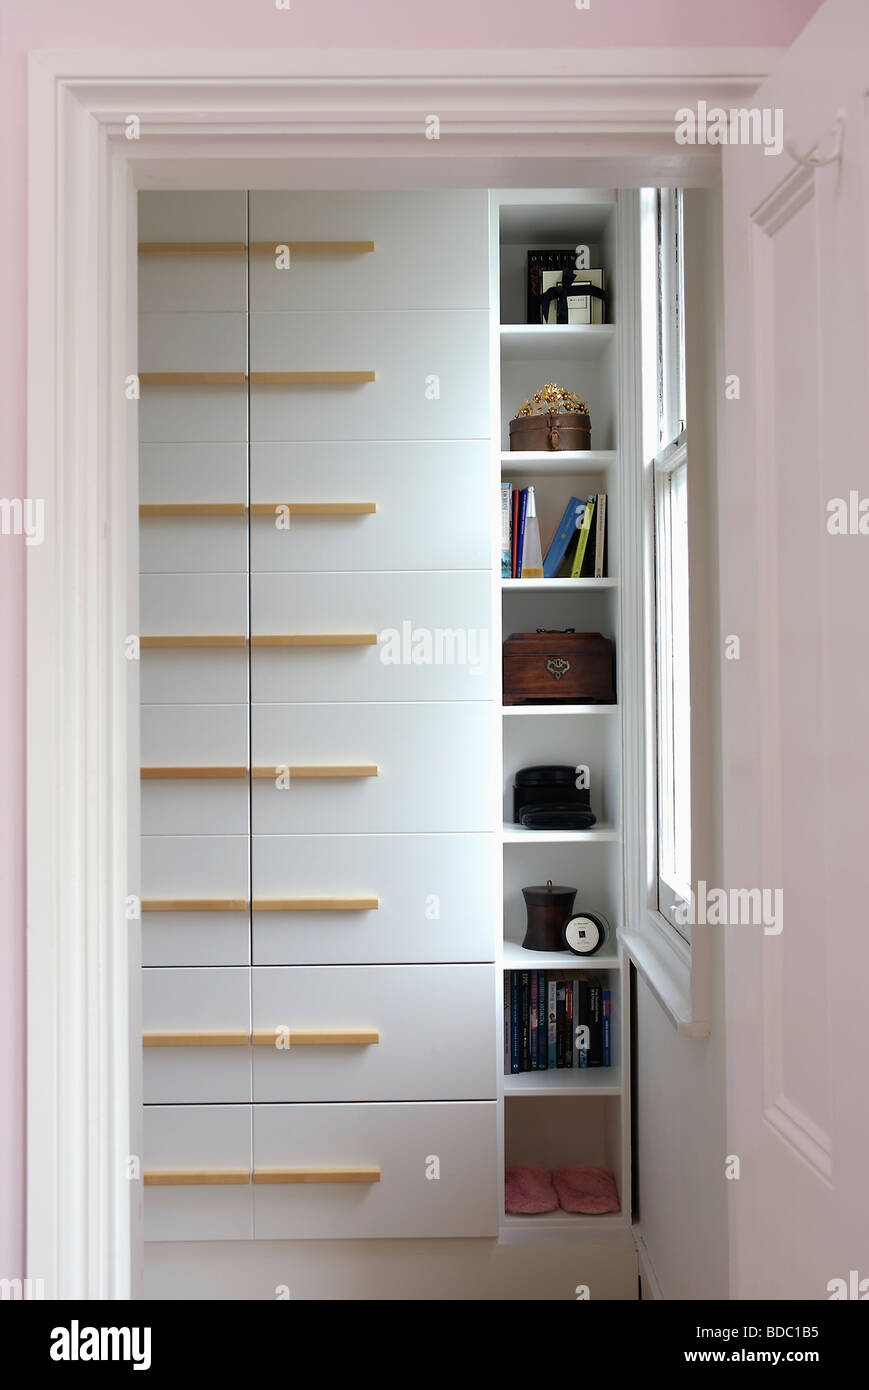 narrow storage shelves